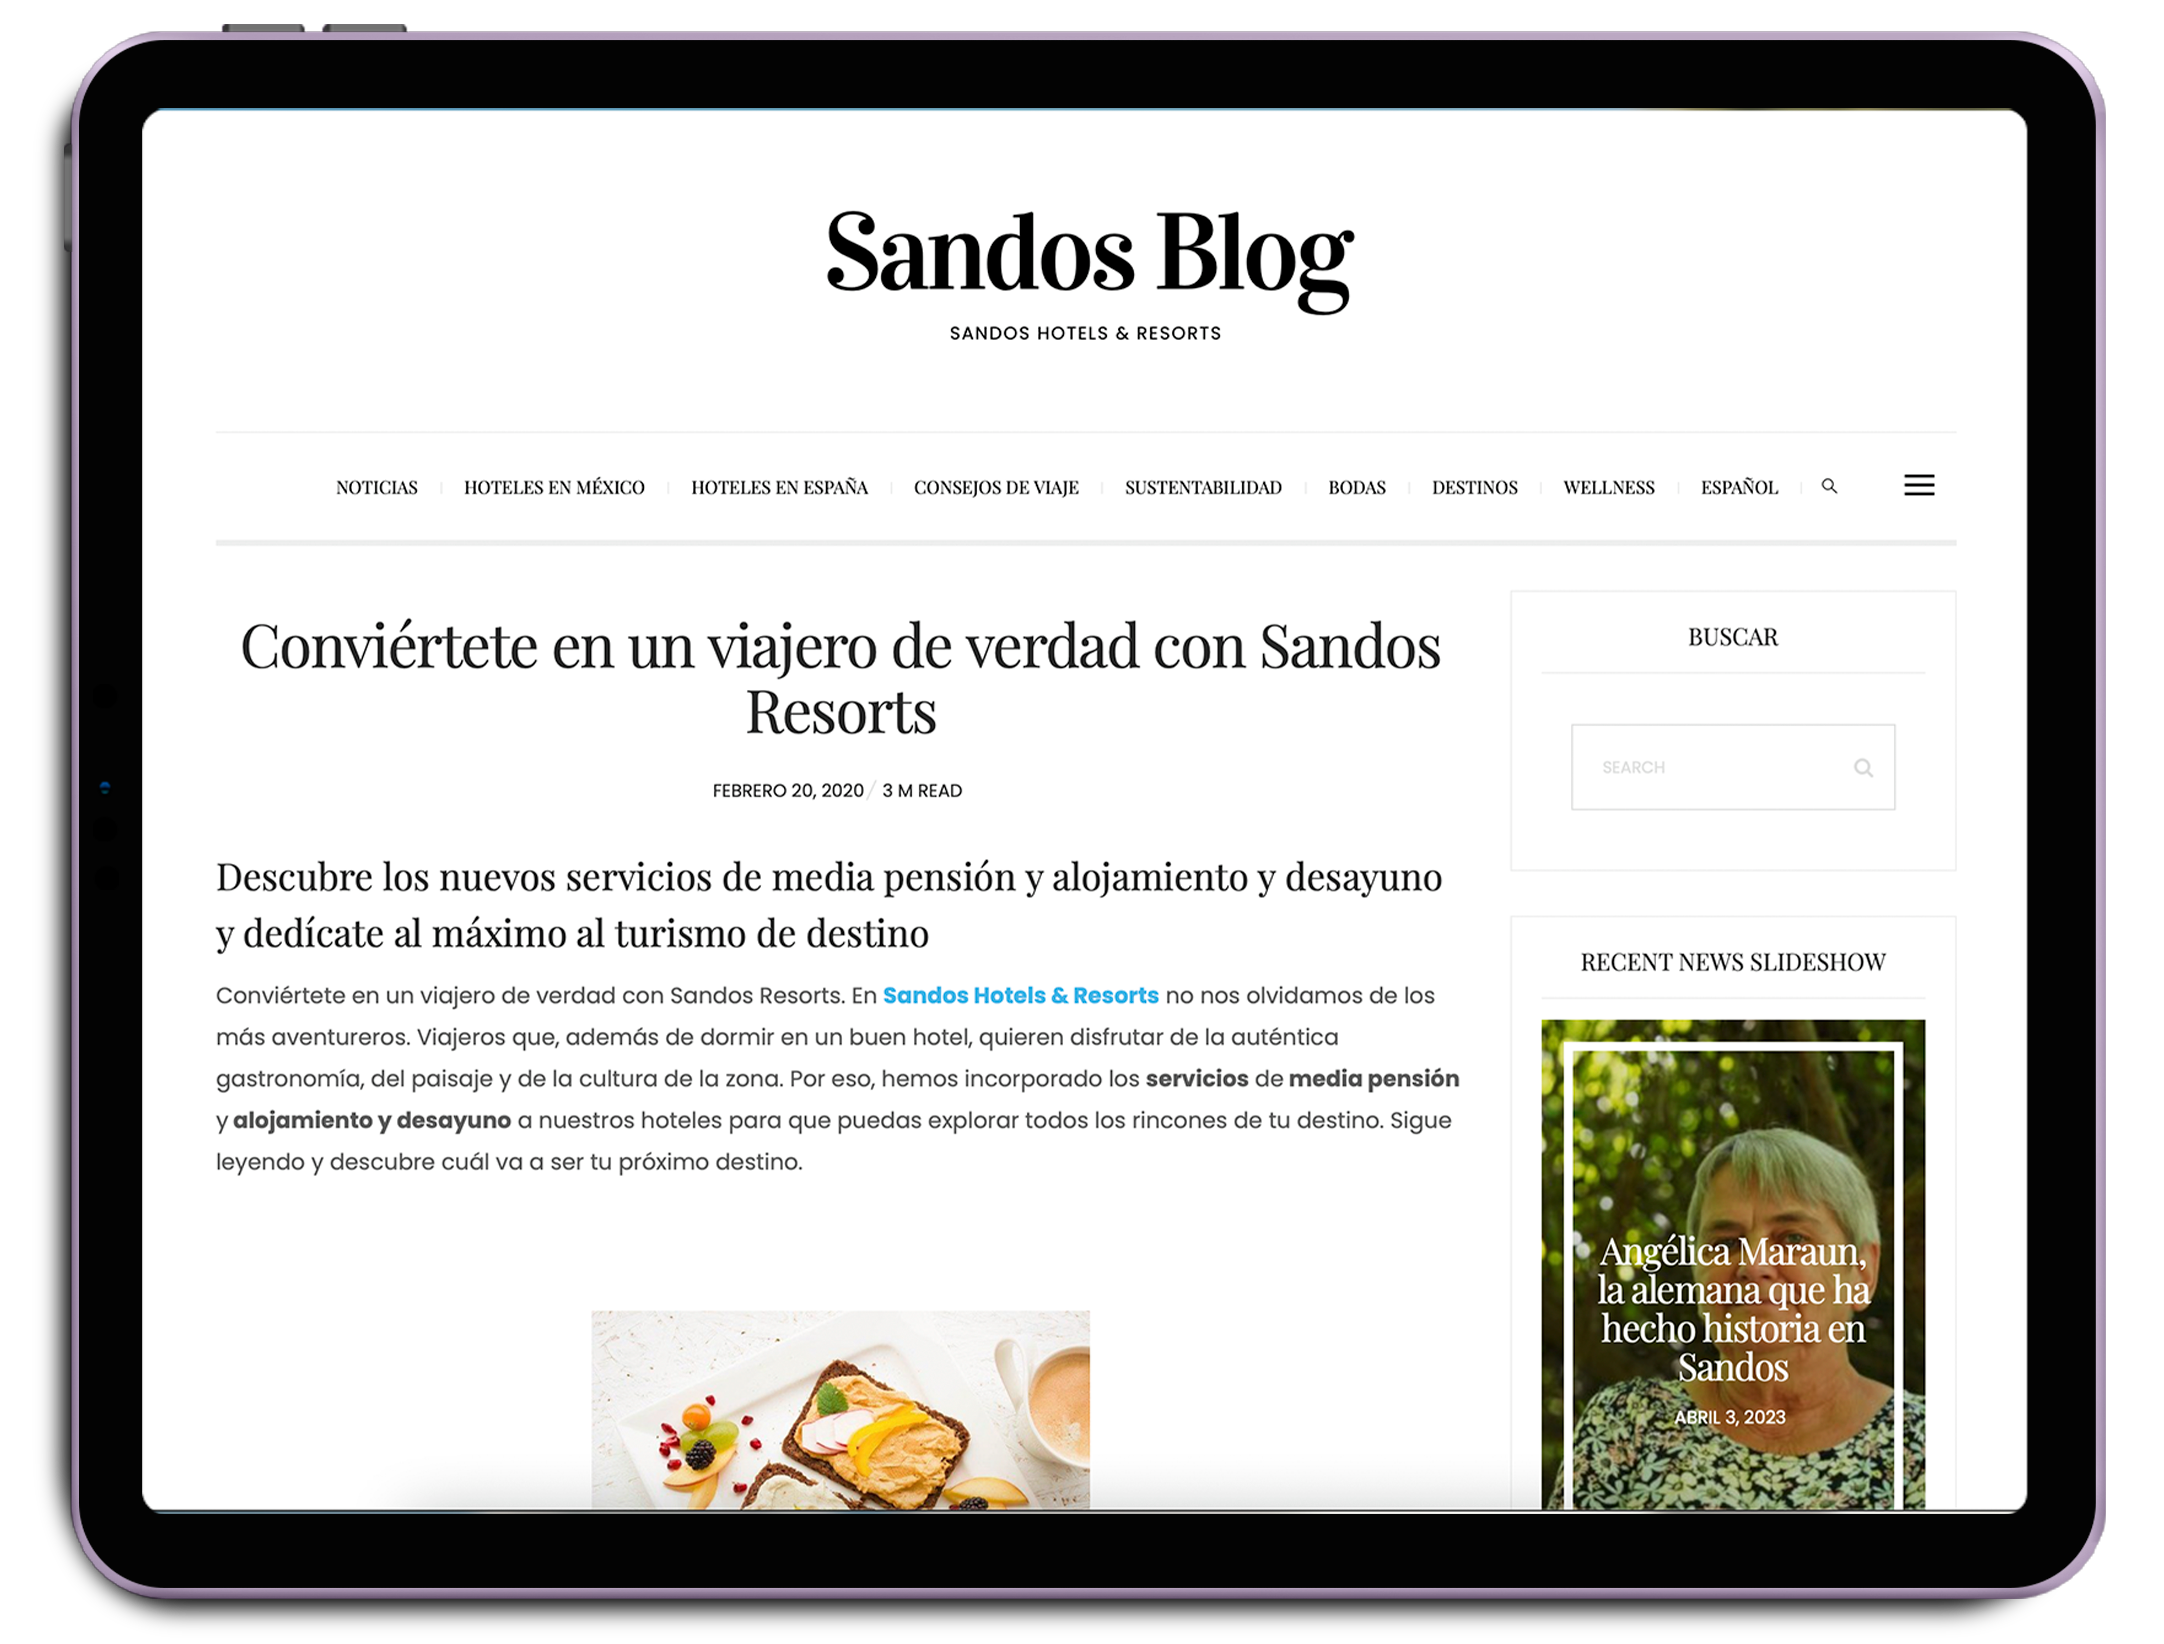 SANDOS HOTELS & RESORTS - CONTENT CREATION AND DIGITAL MARKETING - Duplicate